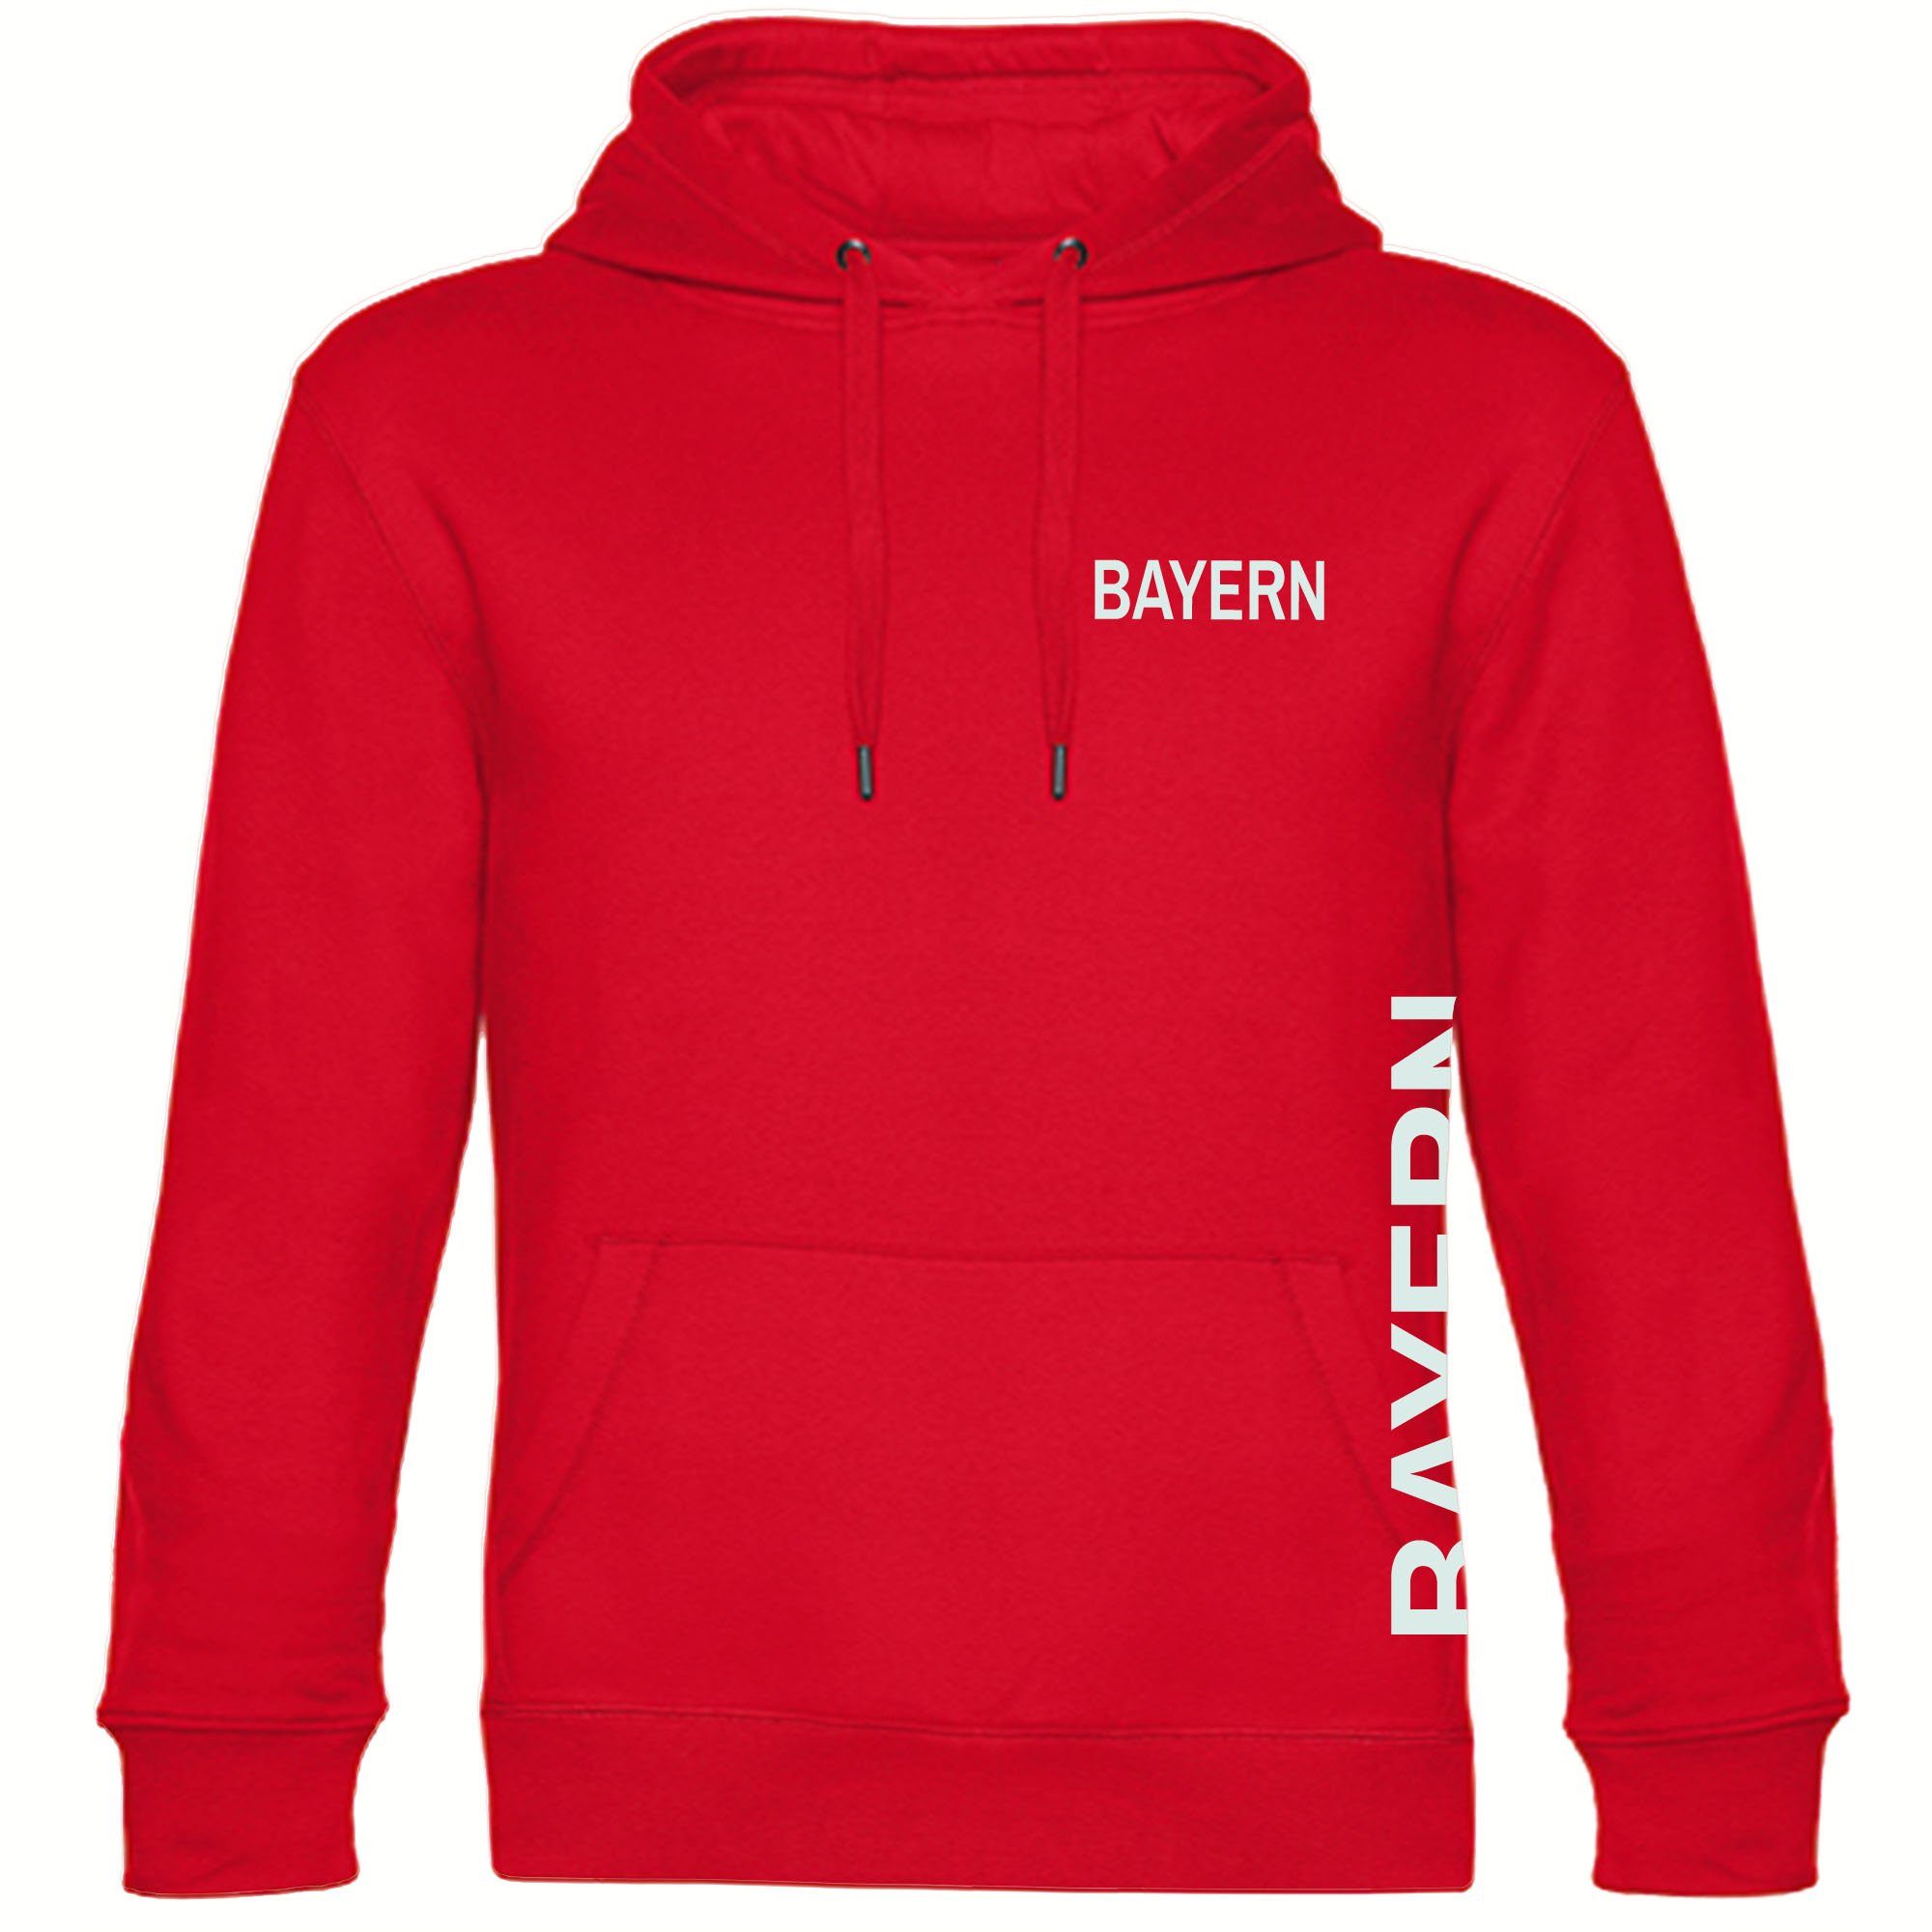 multifanshop Kapuzensweatshirt Bayern - Brust & Seite - Pullover